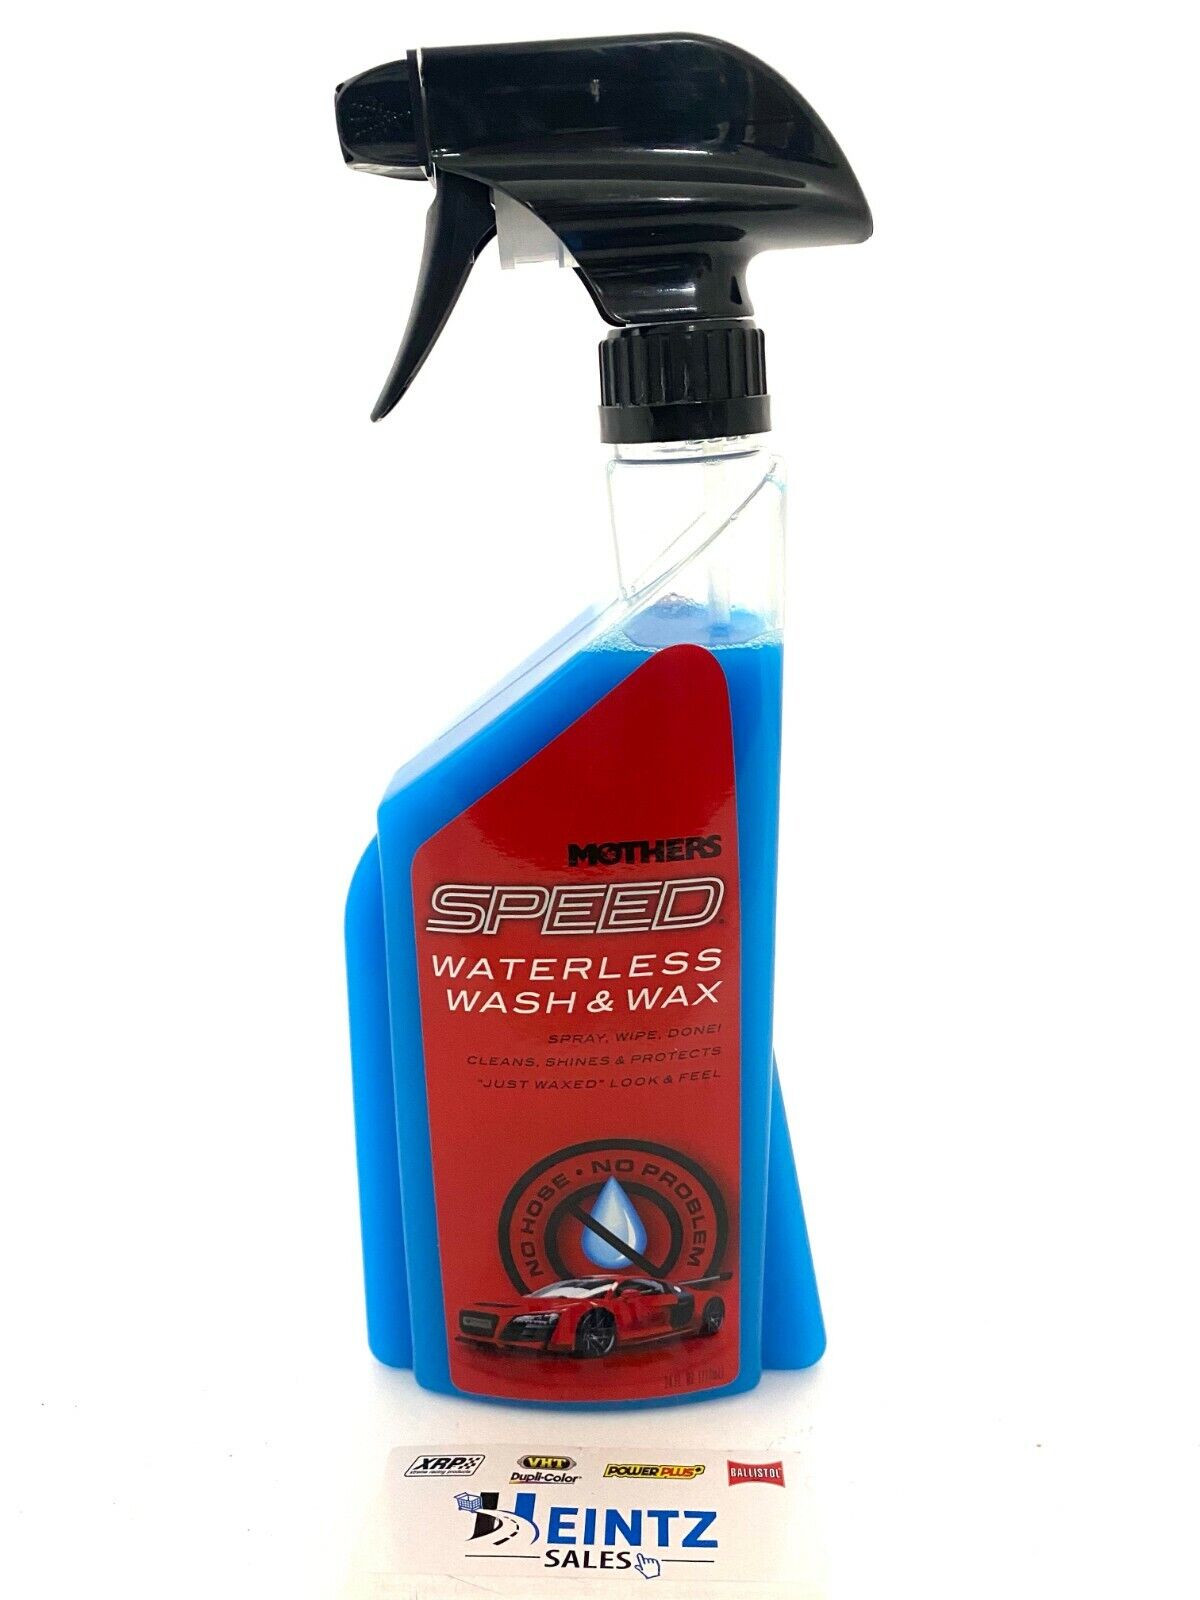 MOTHERS 15644 Speed Waterless Wash & Wax - Spray, Wipe, Done - 24 oz